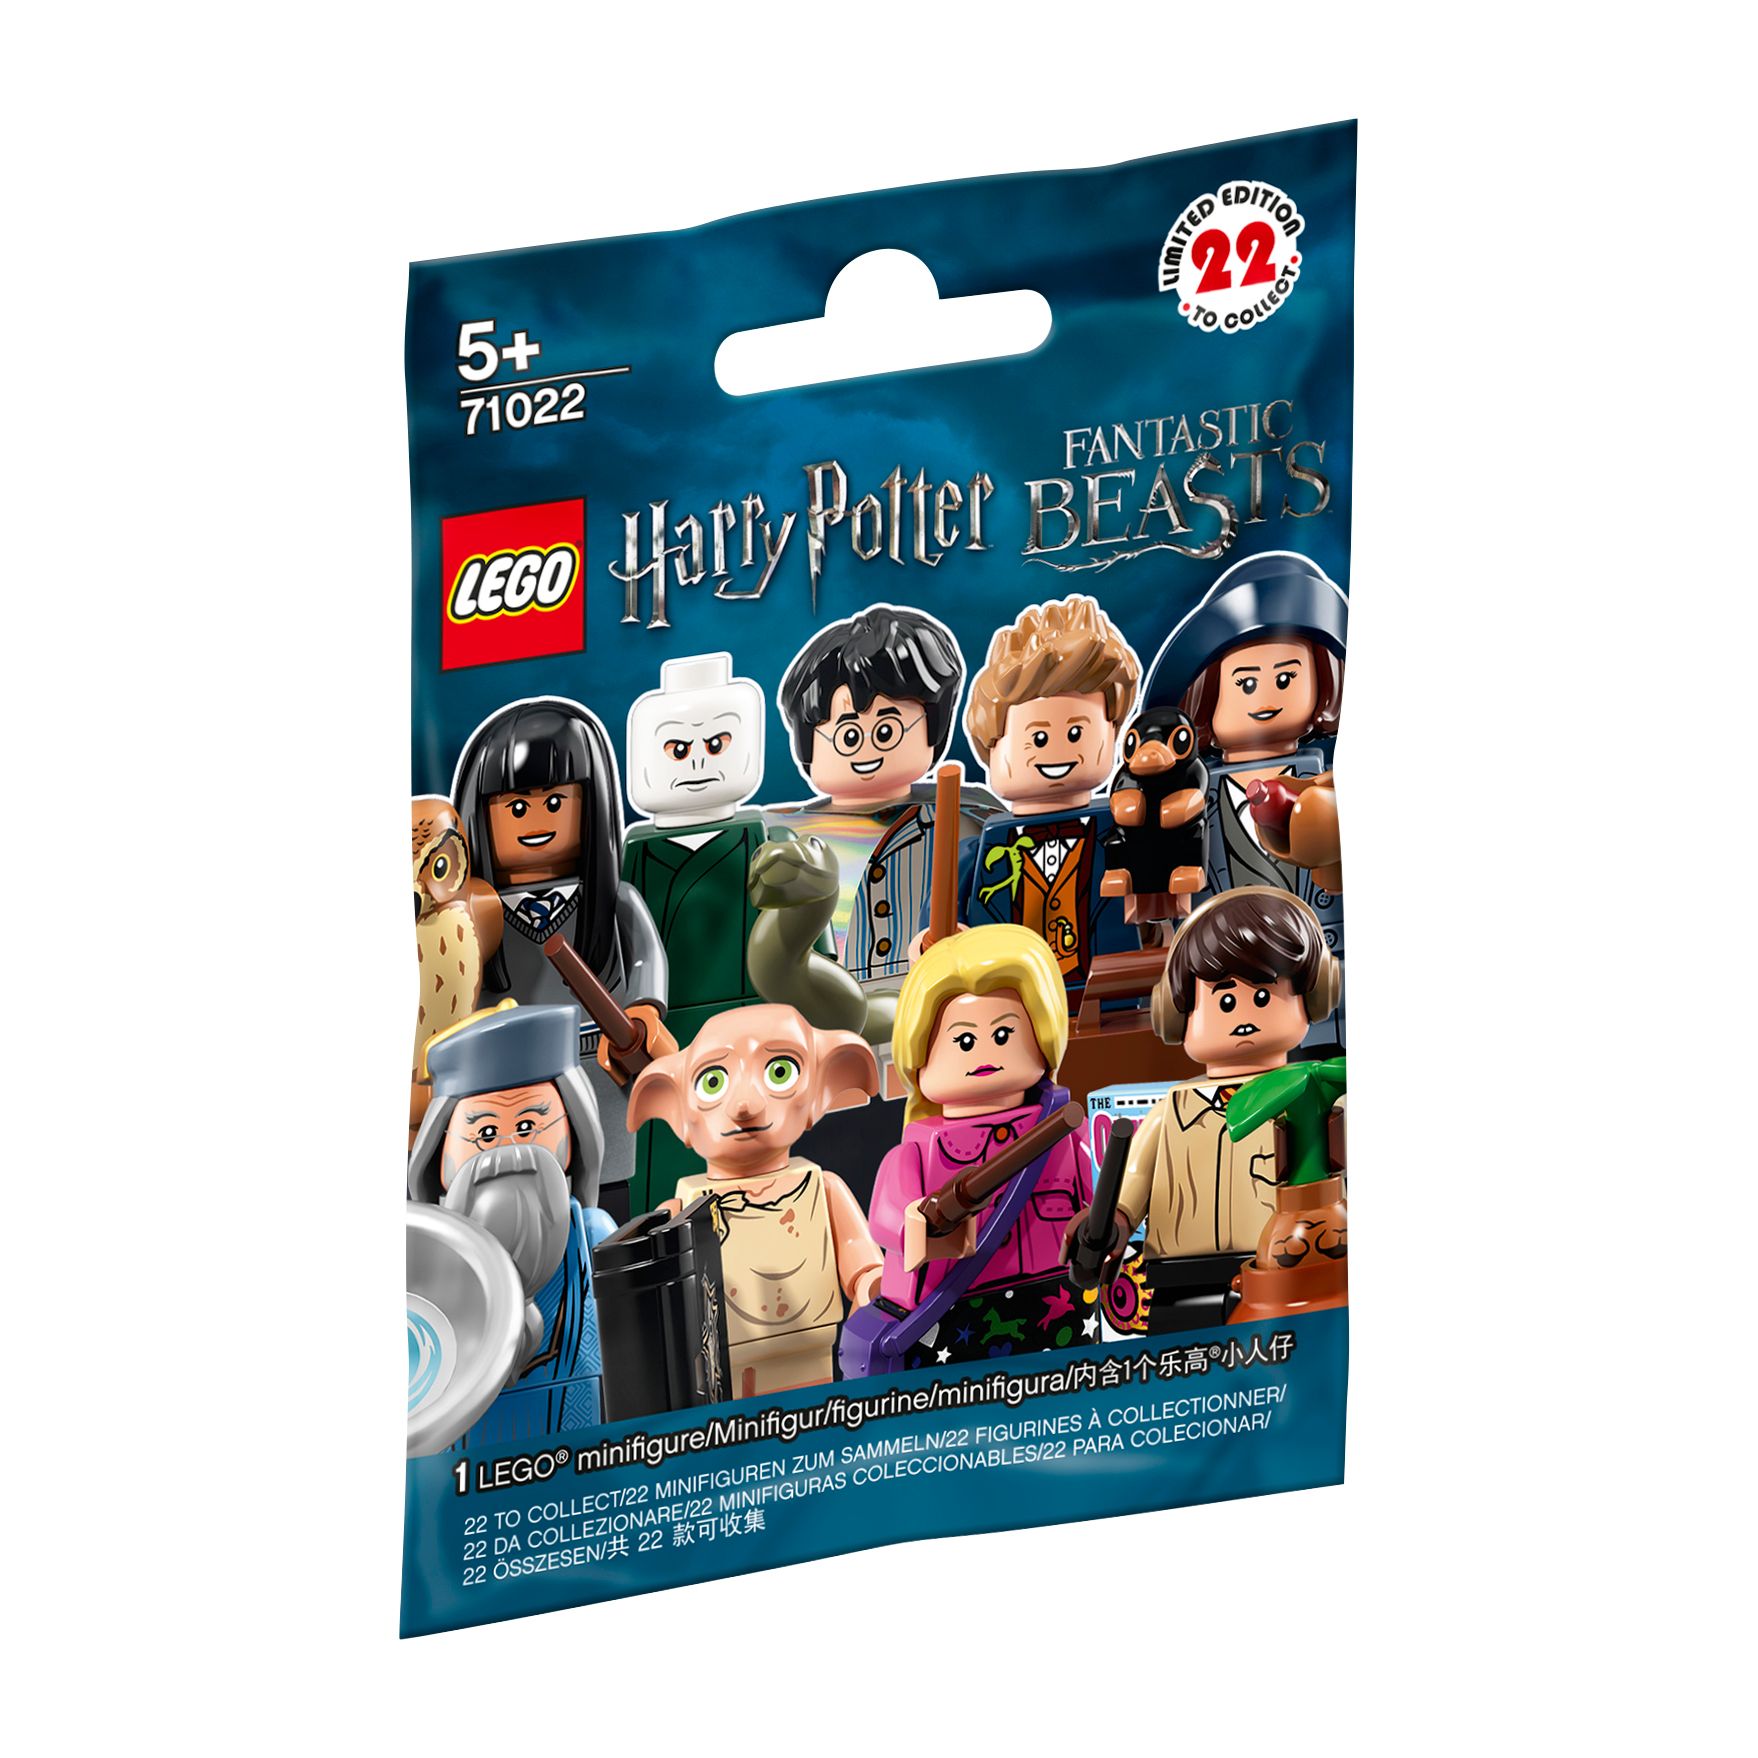 Figurina - Lego Harry Potter - Minifigure Harry Potter and Fantastic Beasts, 71022 | LEGO